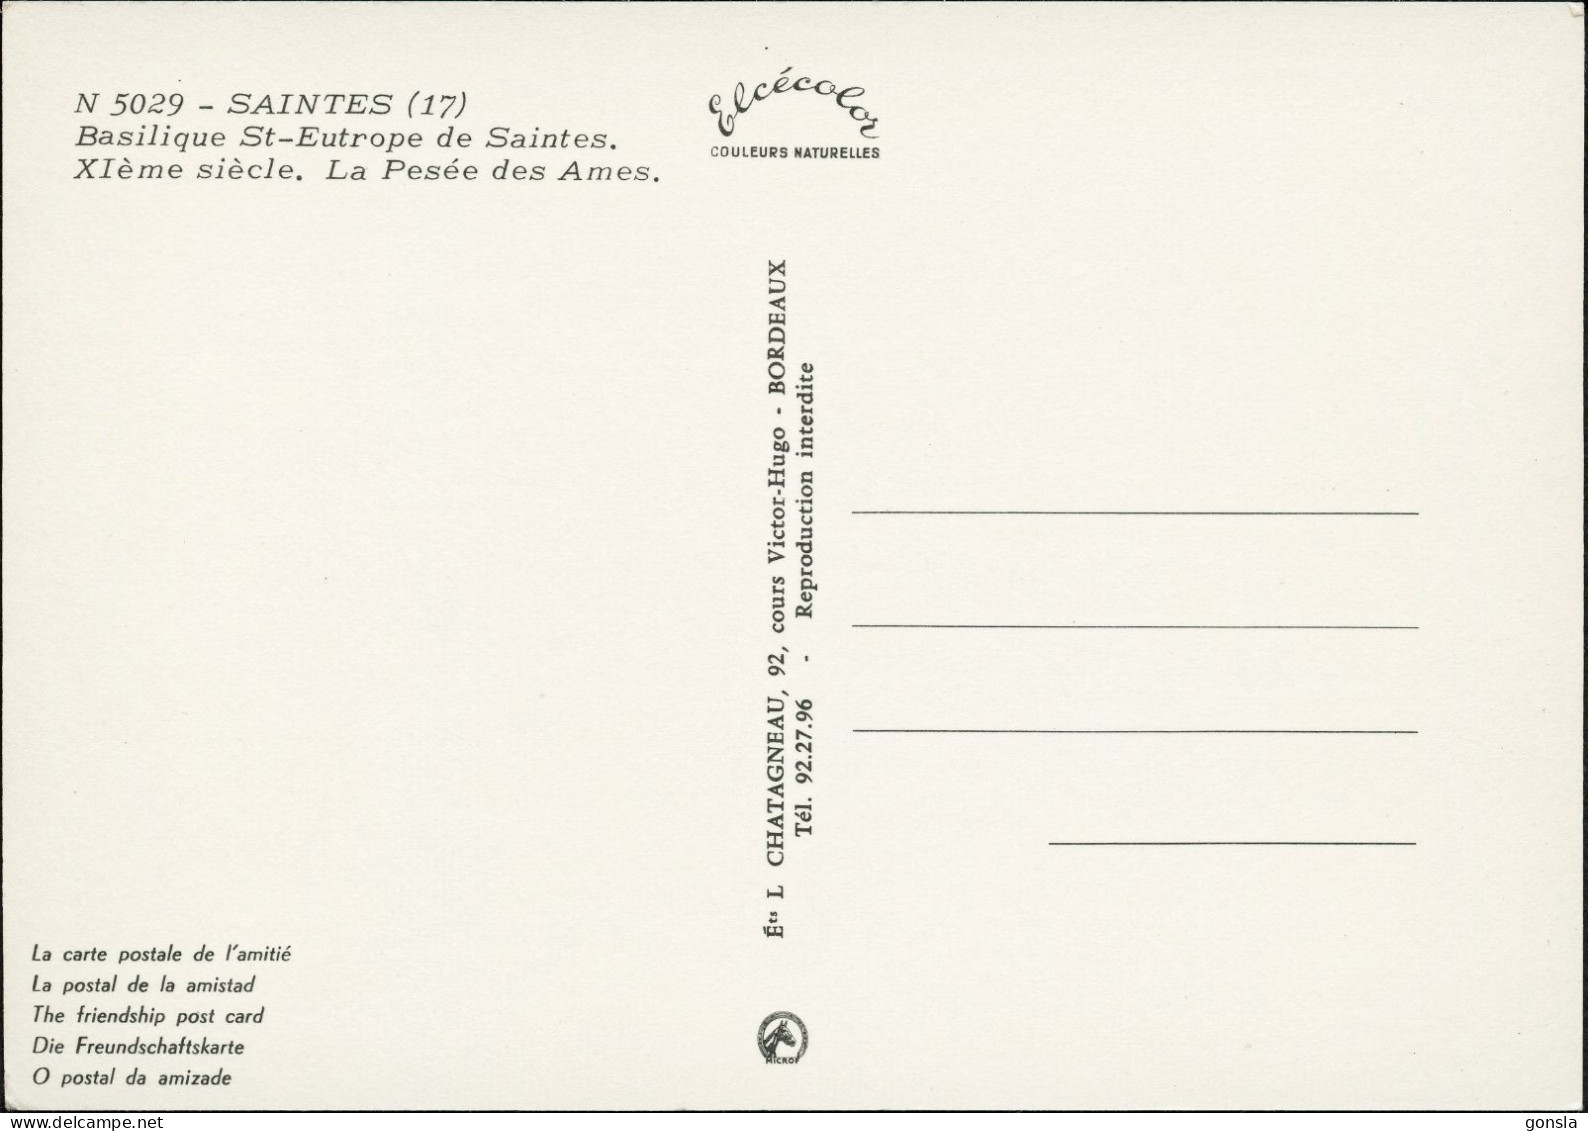 SAINTES 1970 "Basilique St-Eutrope" Lot De 3 Cartes Postales - Churches & Cathedrals